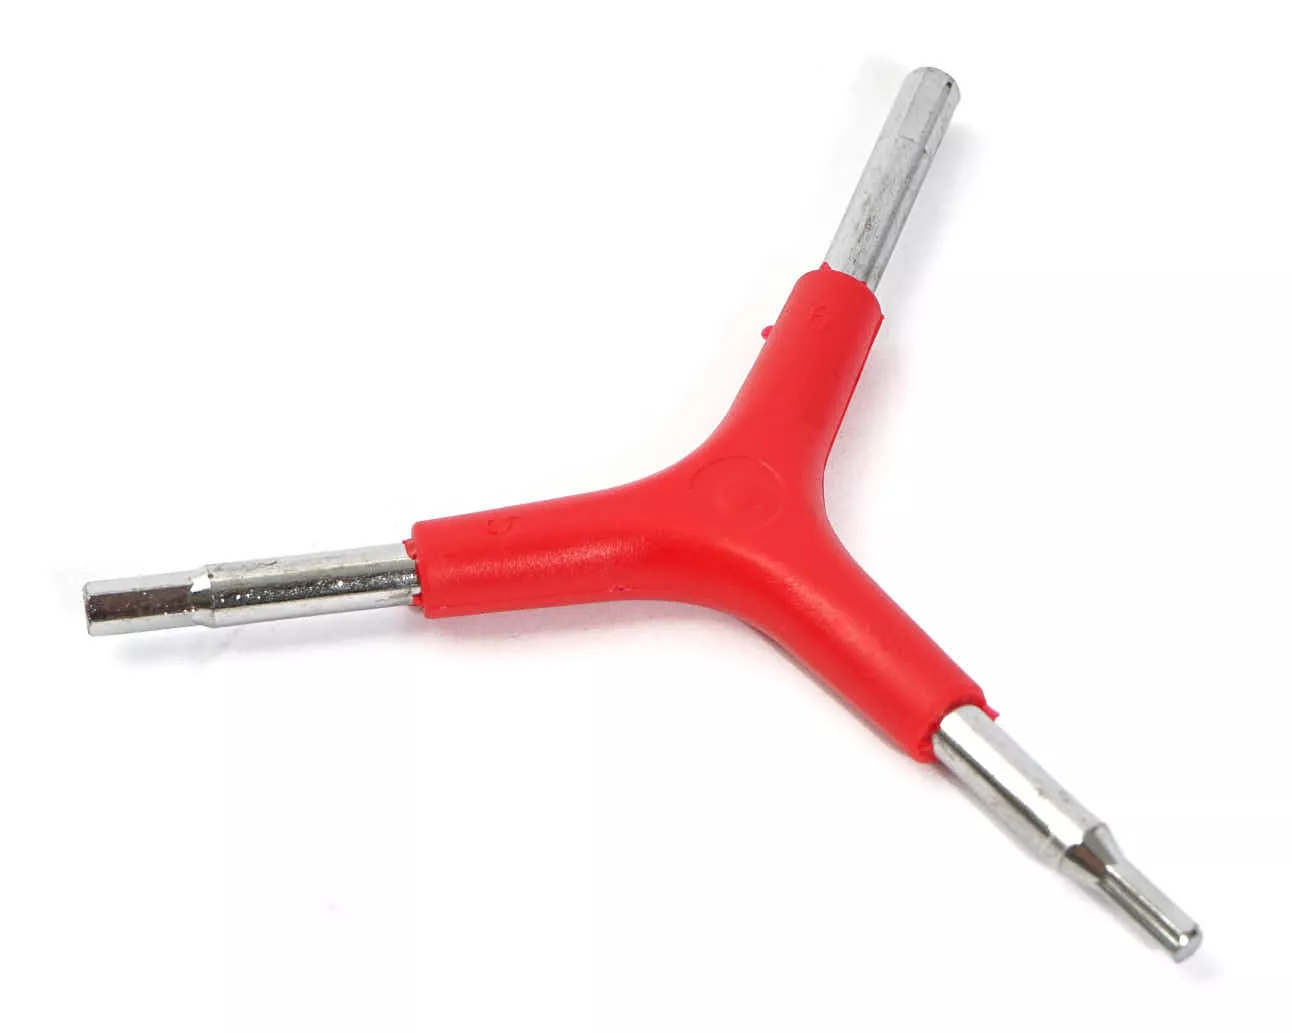 Three-arm spanner tool